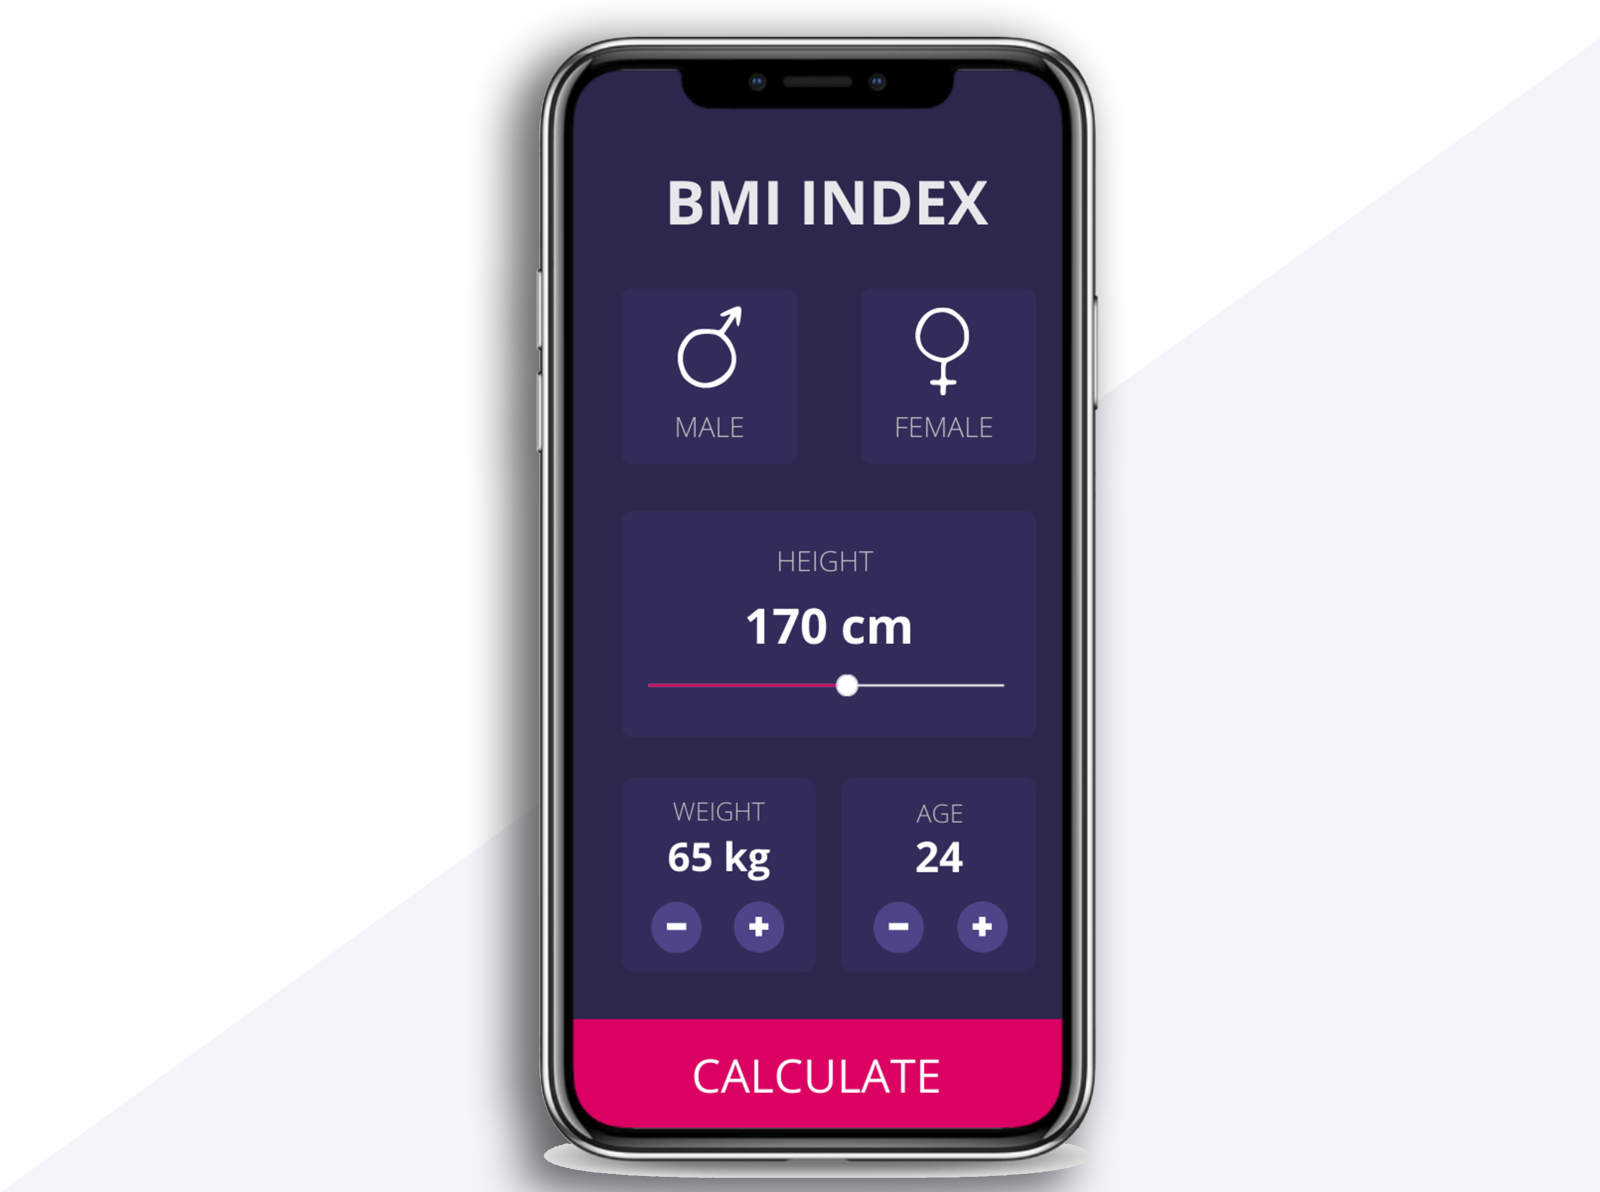 BMI CALCULATOR by Pralay Mondal on Dribbble